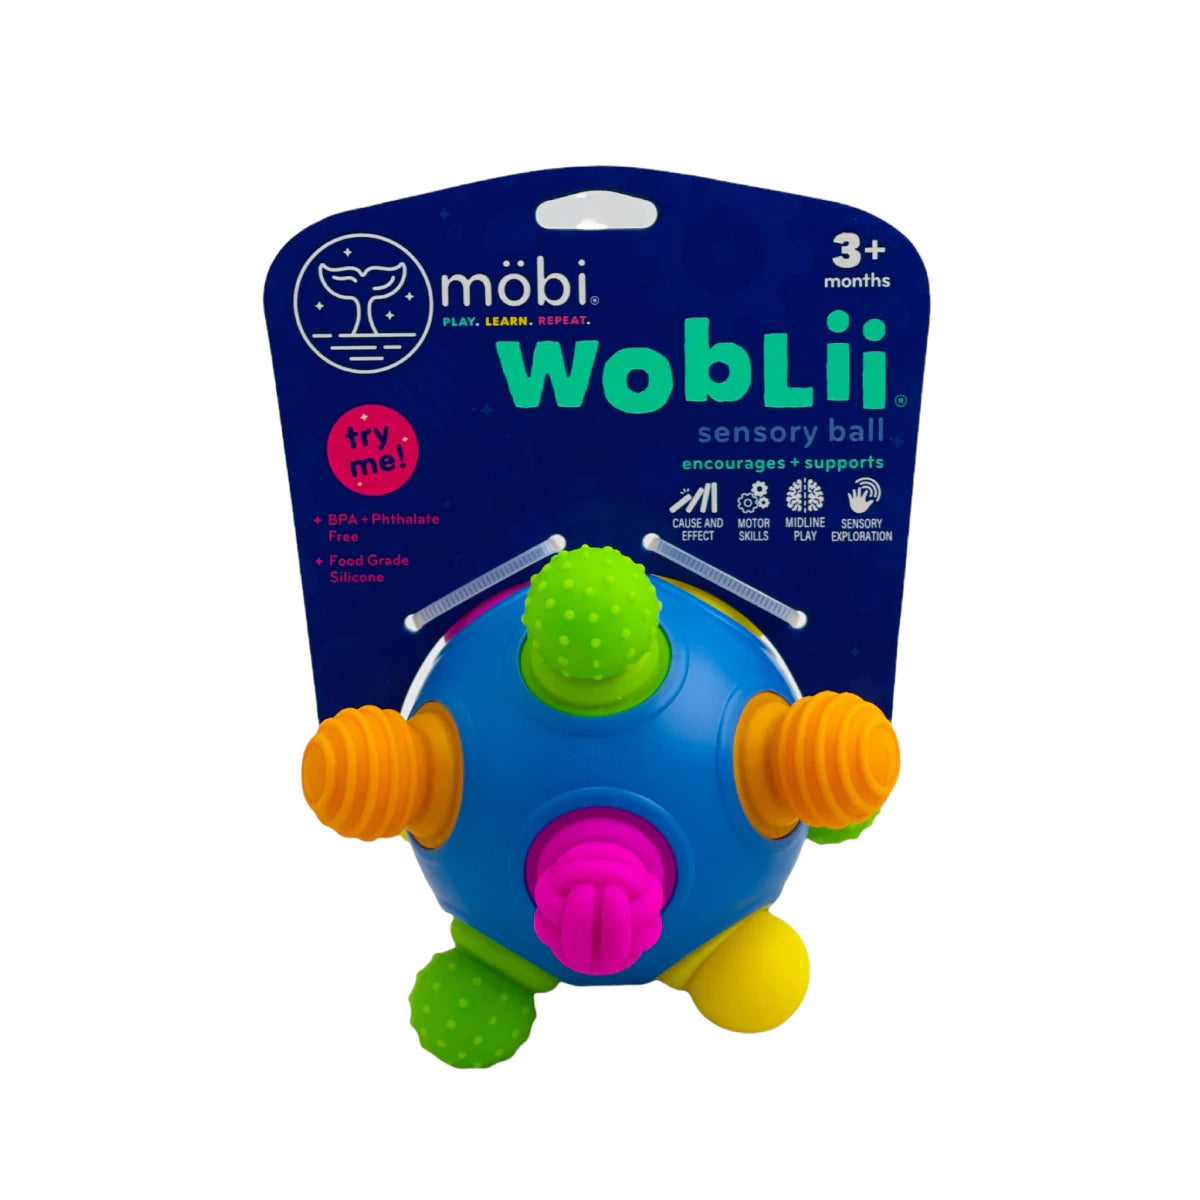 Woblii Sensory Ball by Mobi